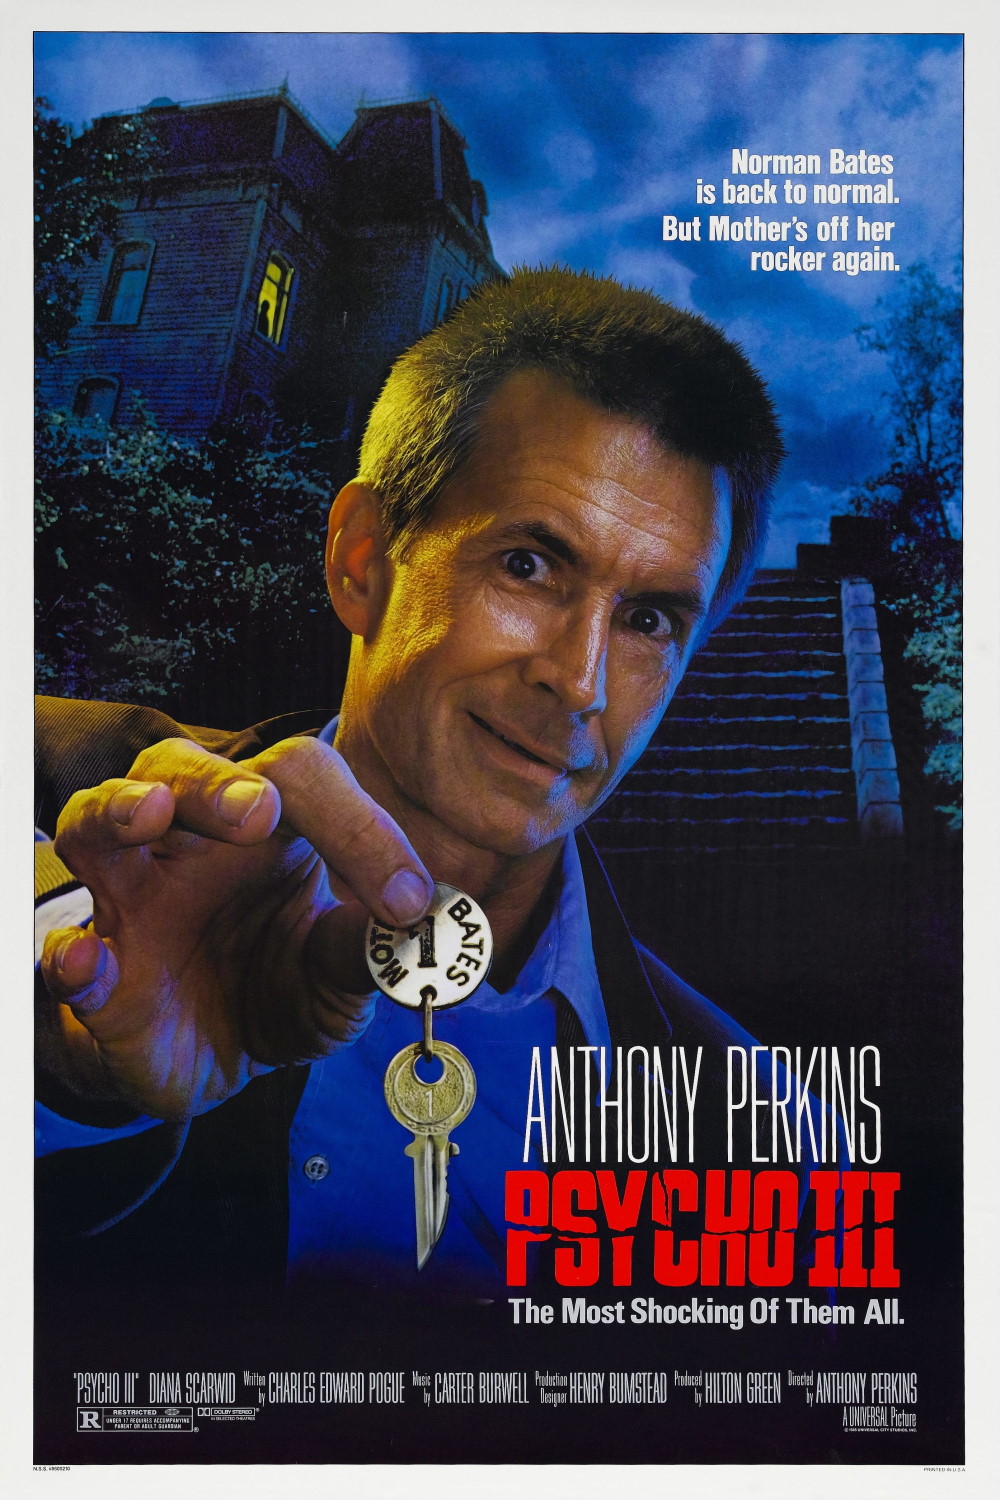 Psycho III (1986) Poster